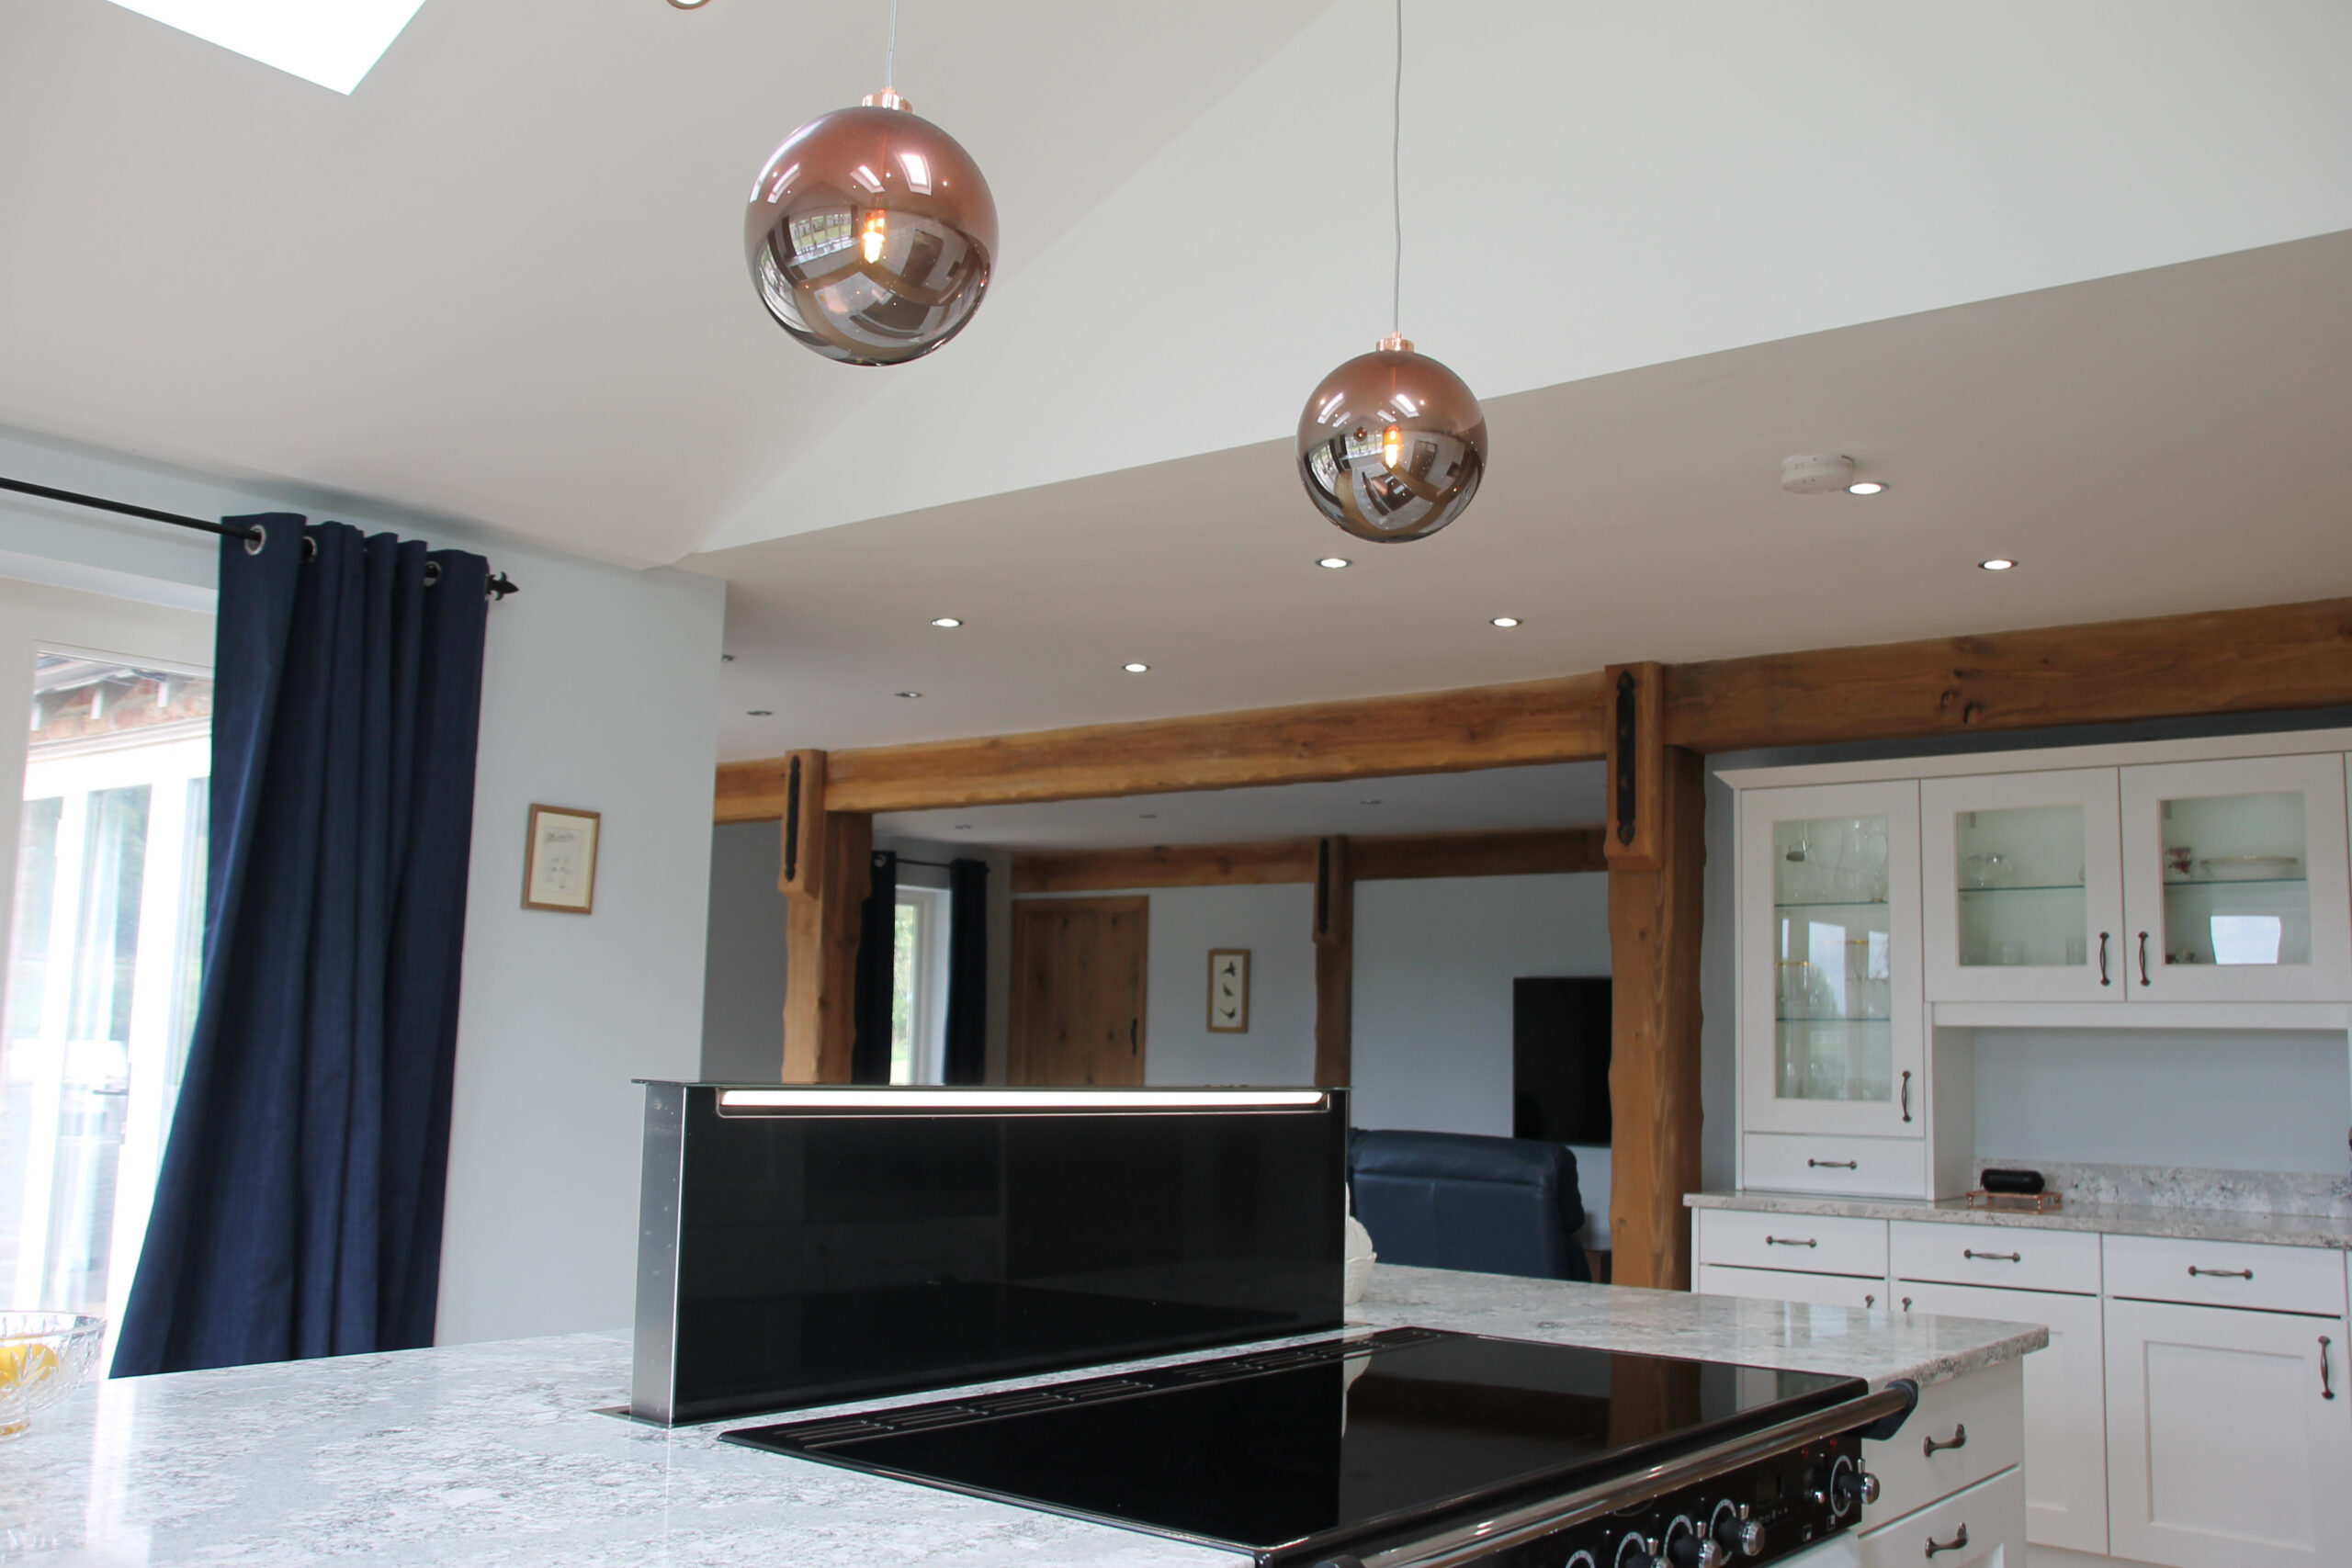 luxury kitchen renovations Hampshire